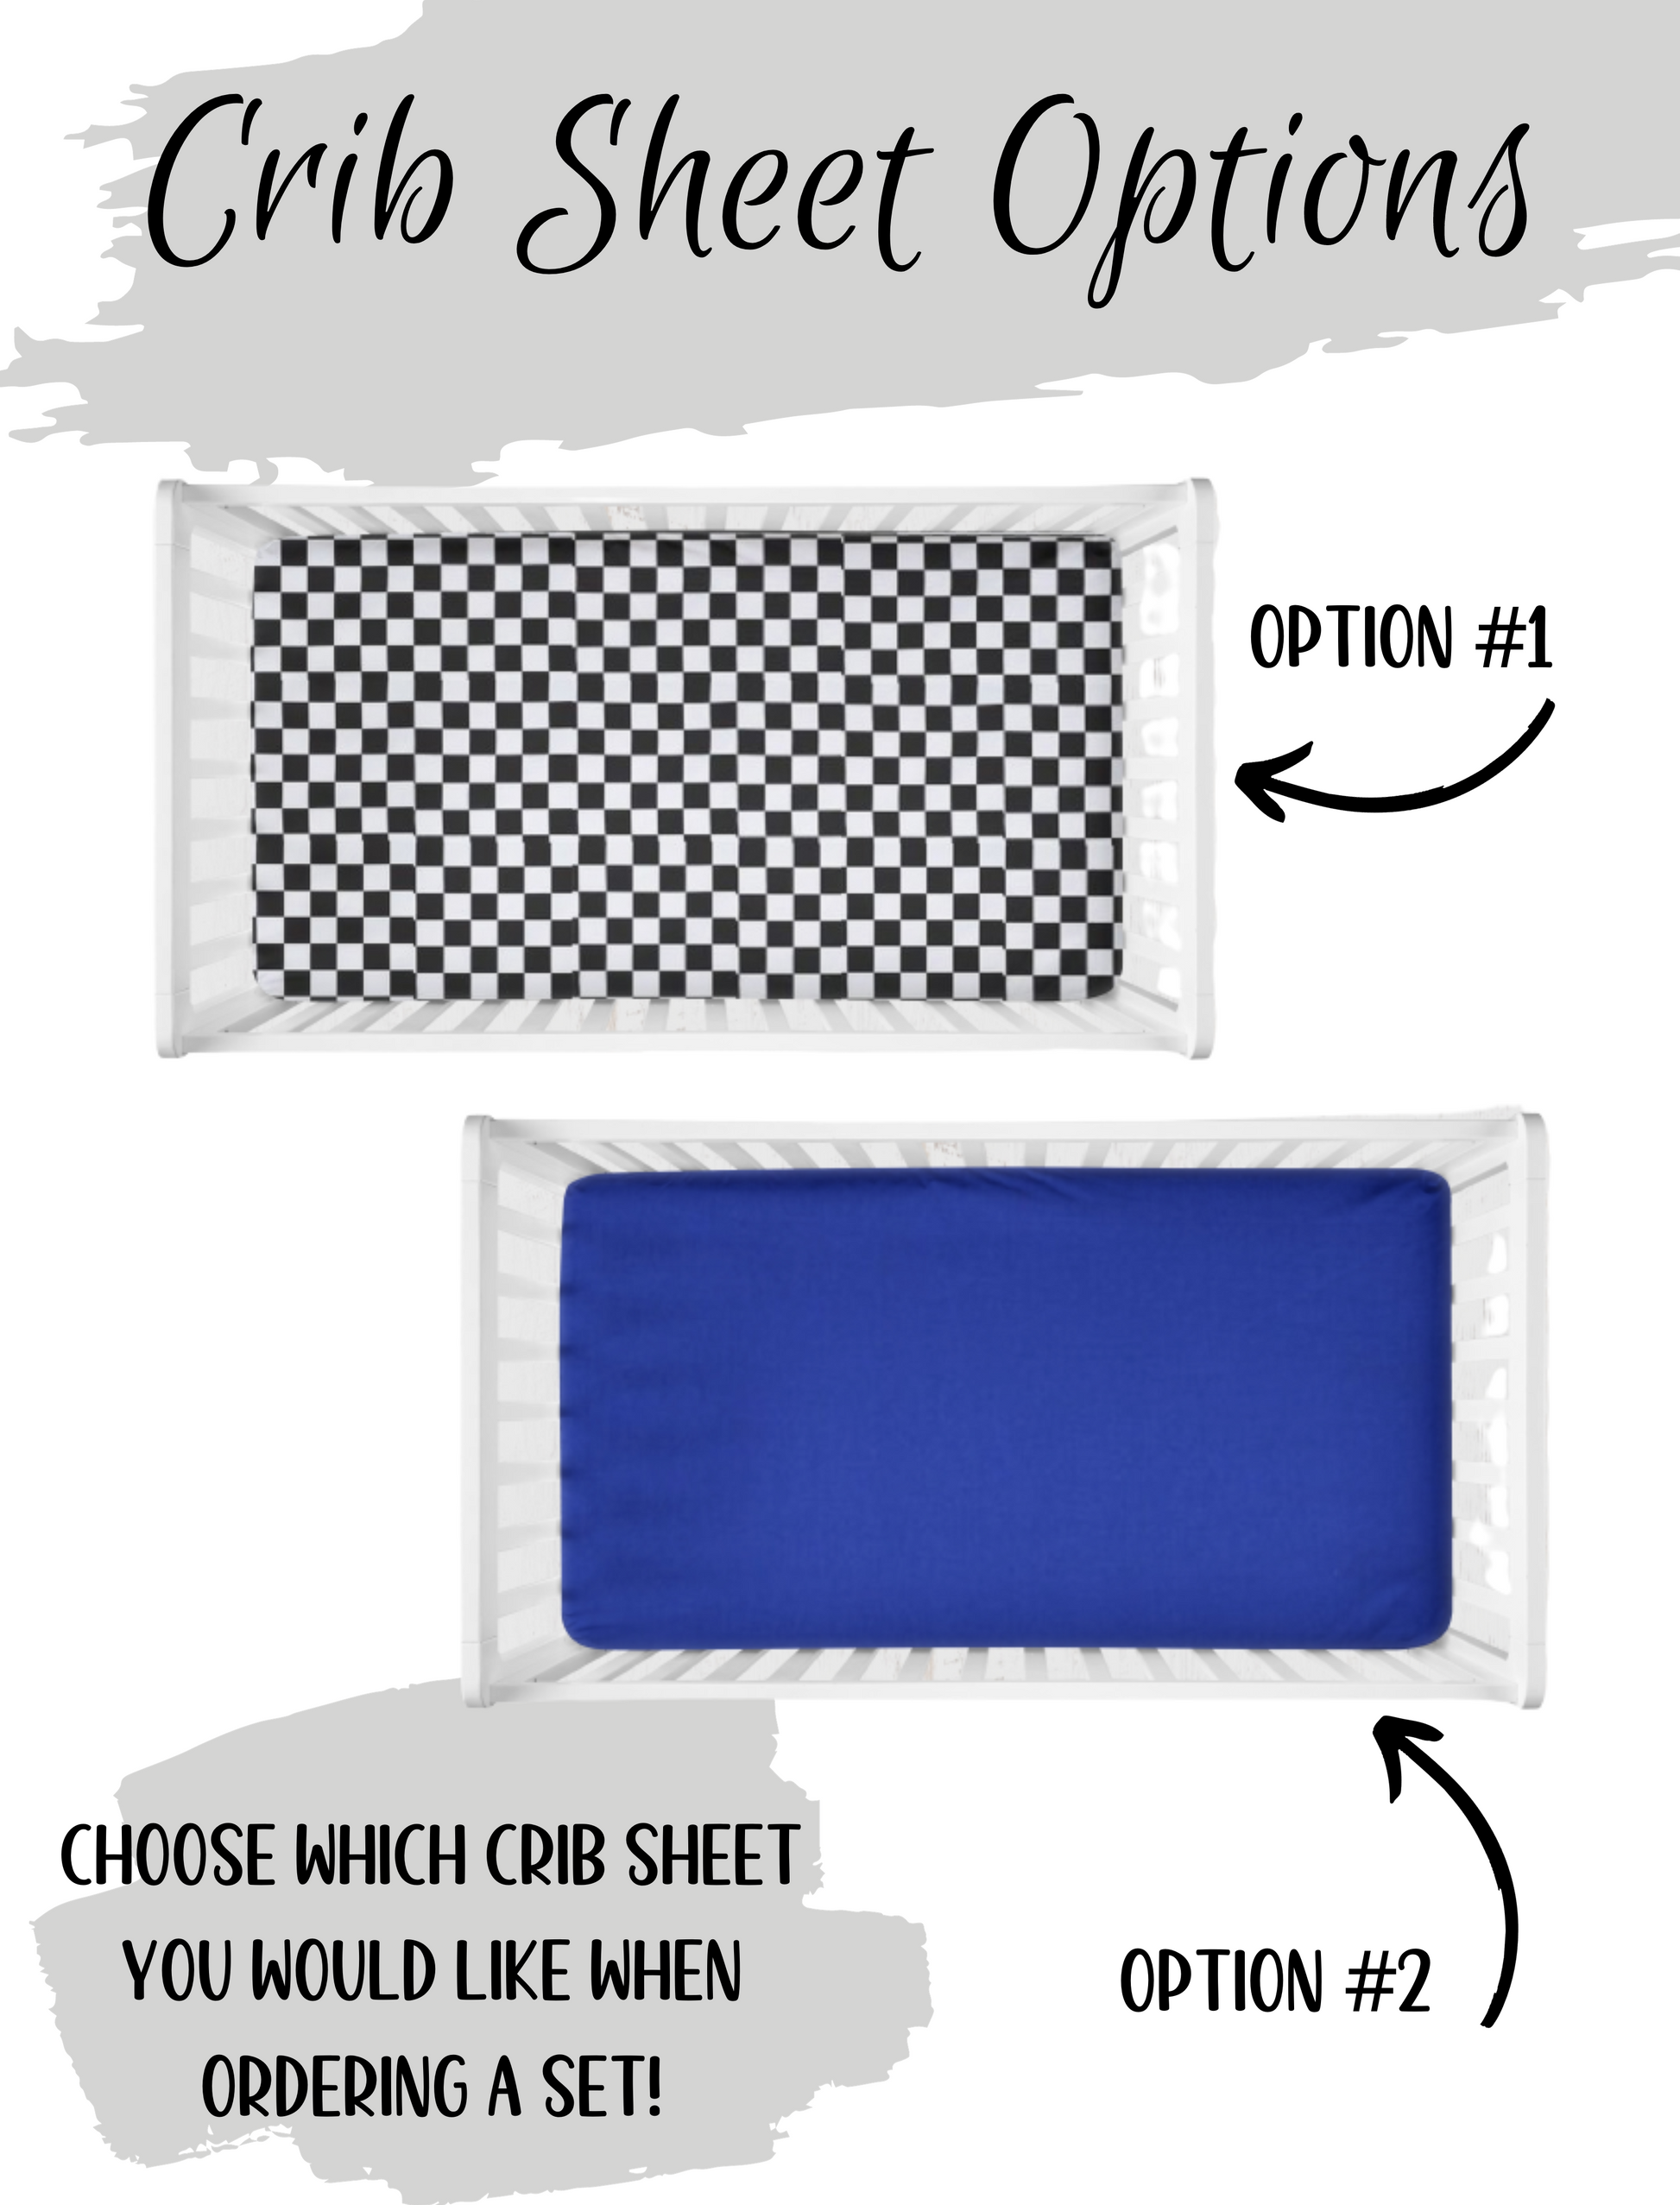 choose checkered crib sheet or blue crib sheet for the set